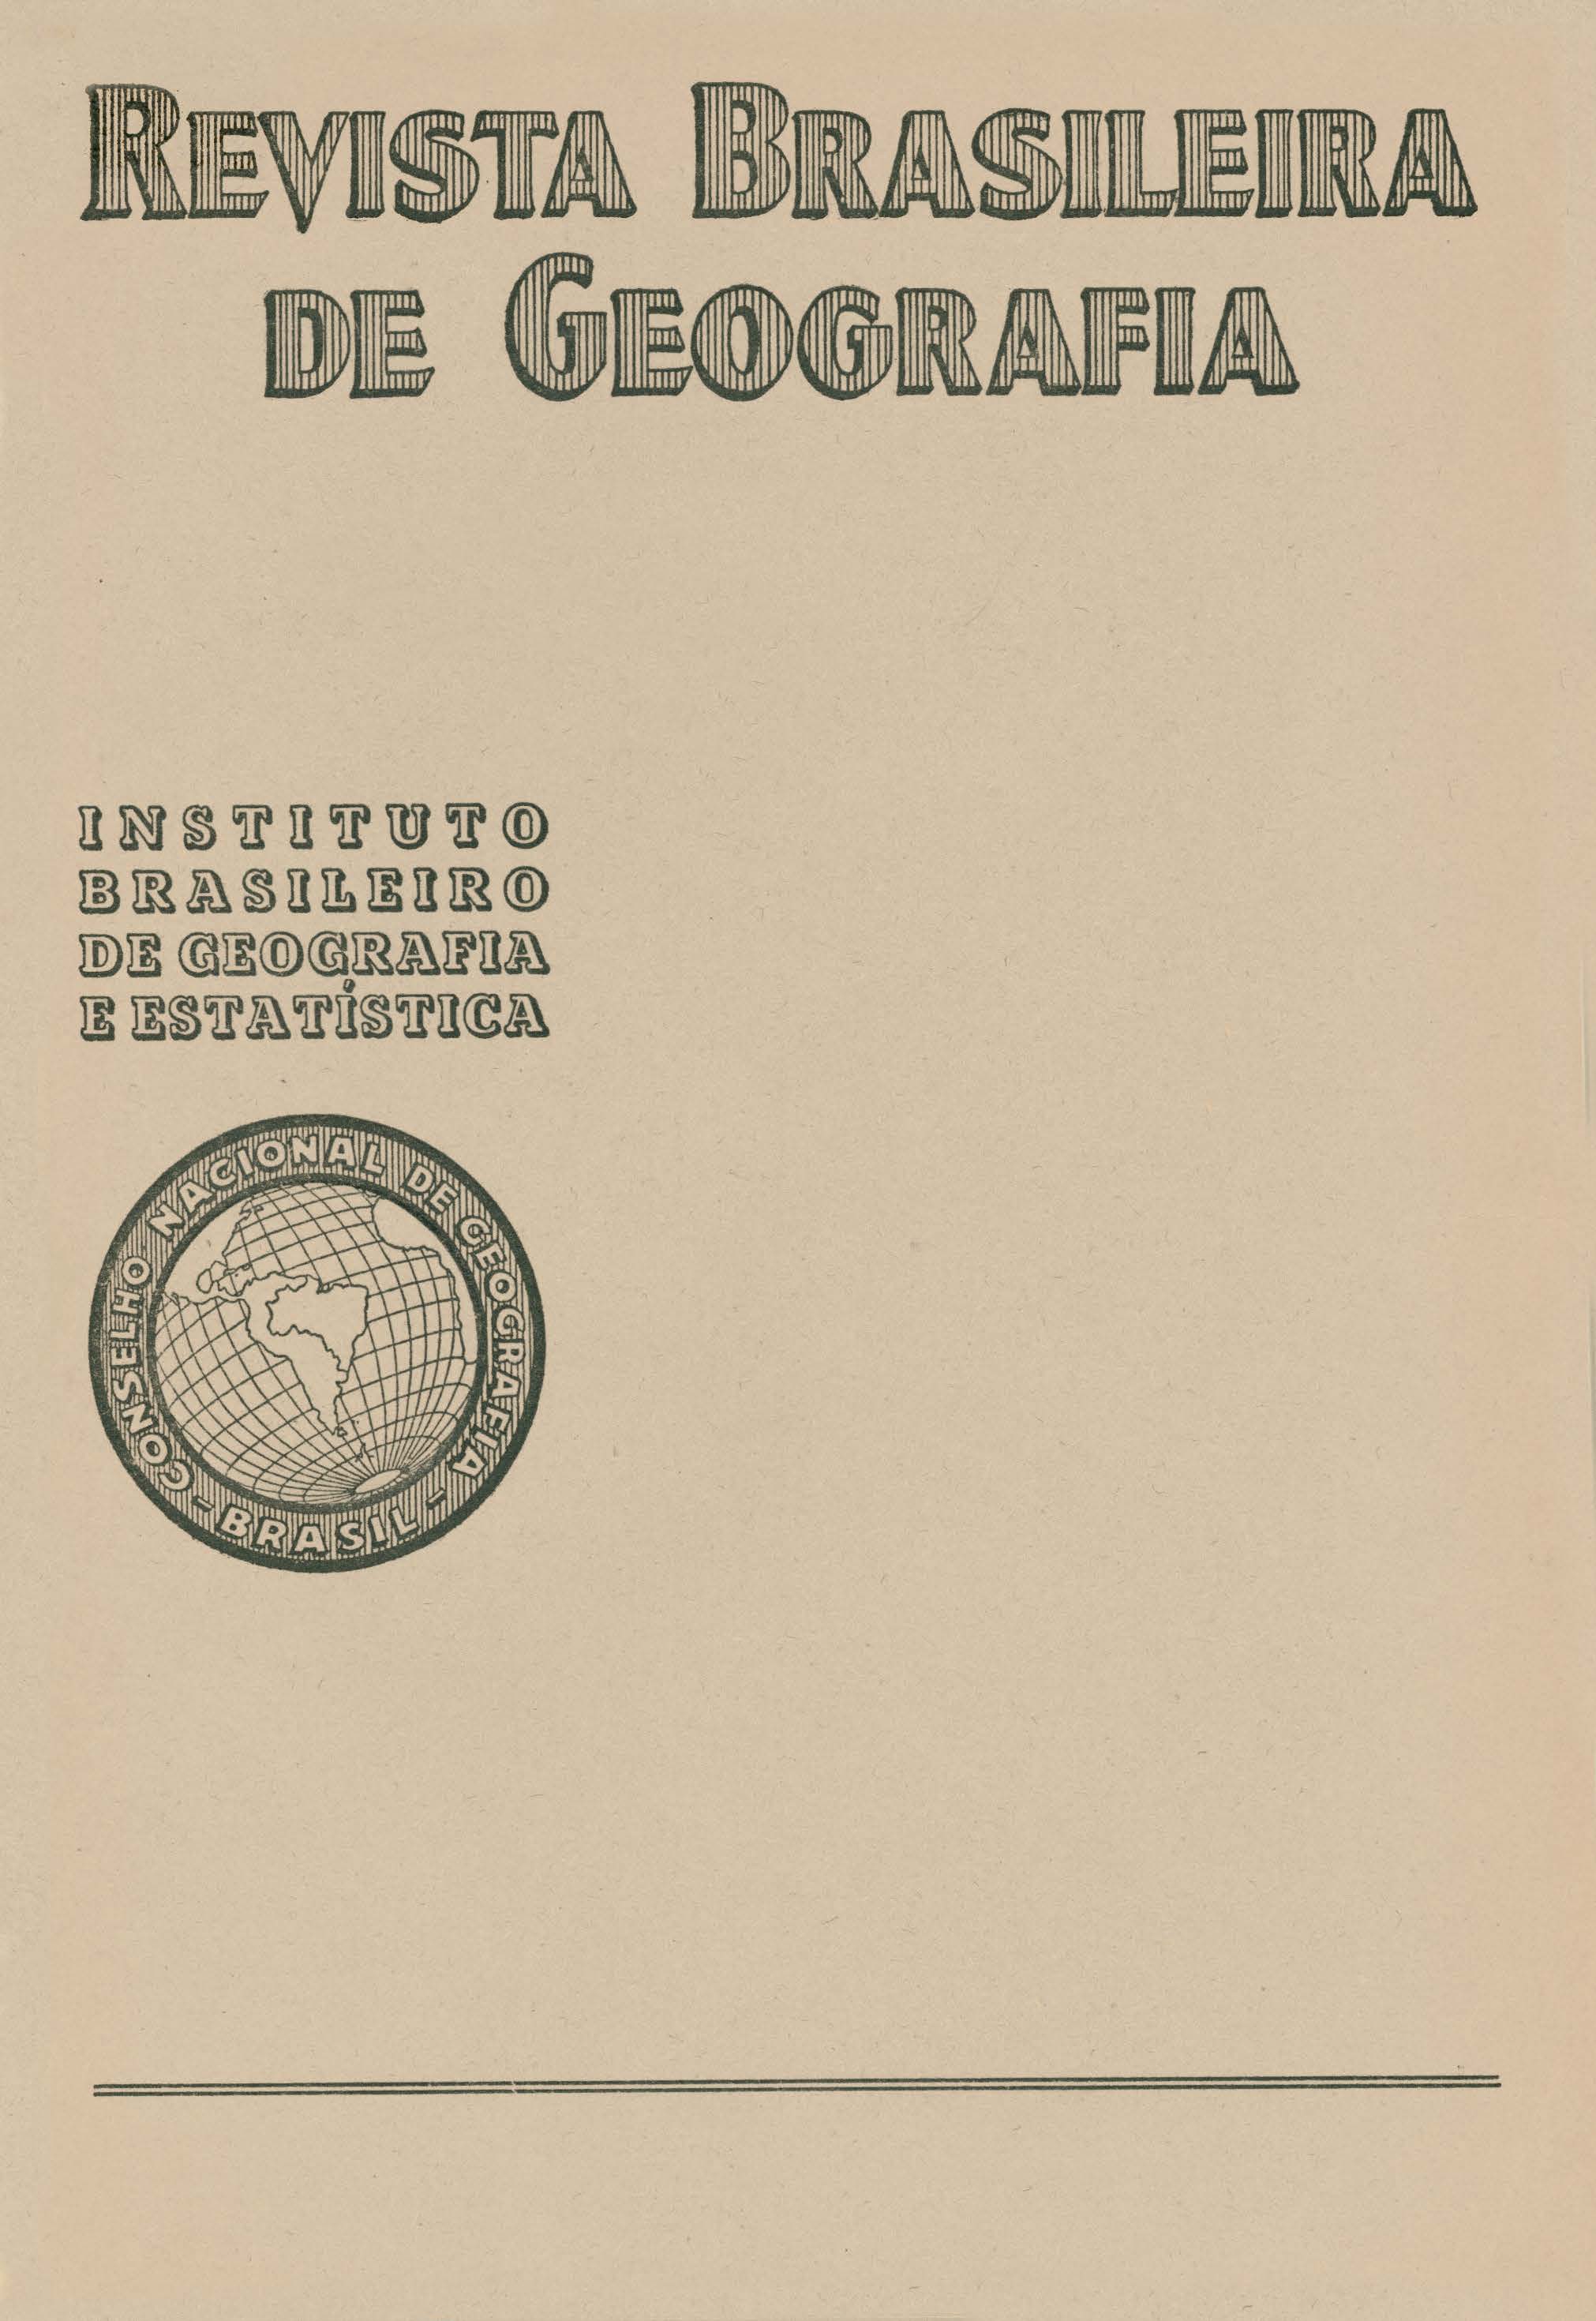 					Visualizar v. 25 n. 3 (1963)
				